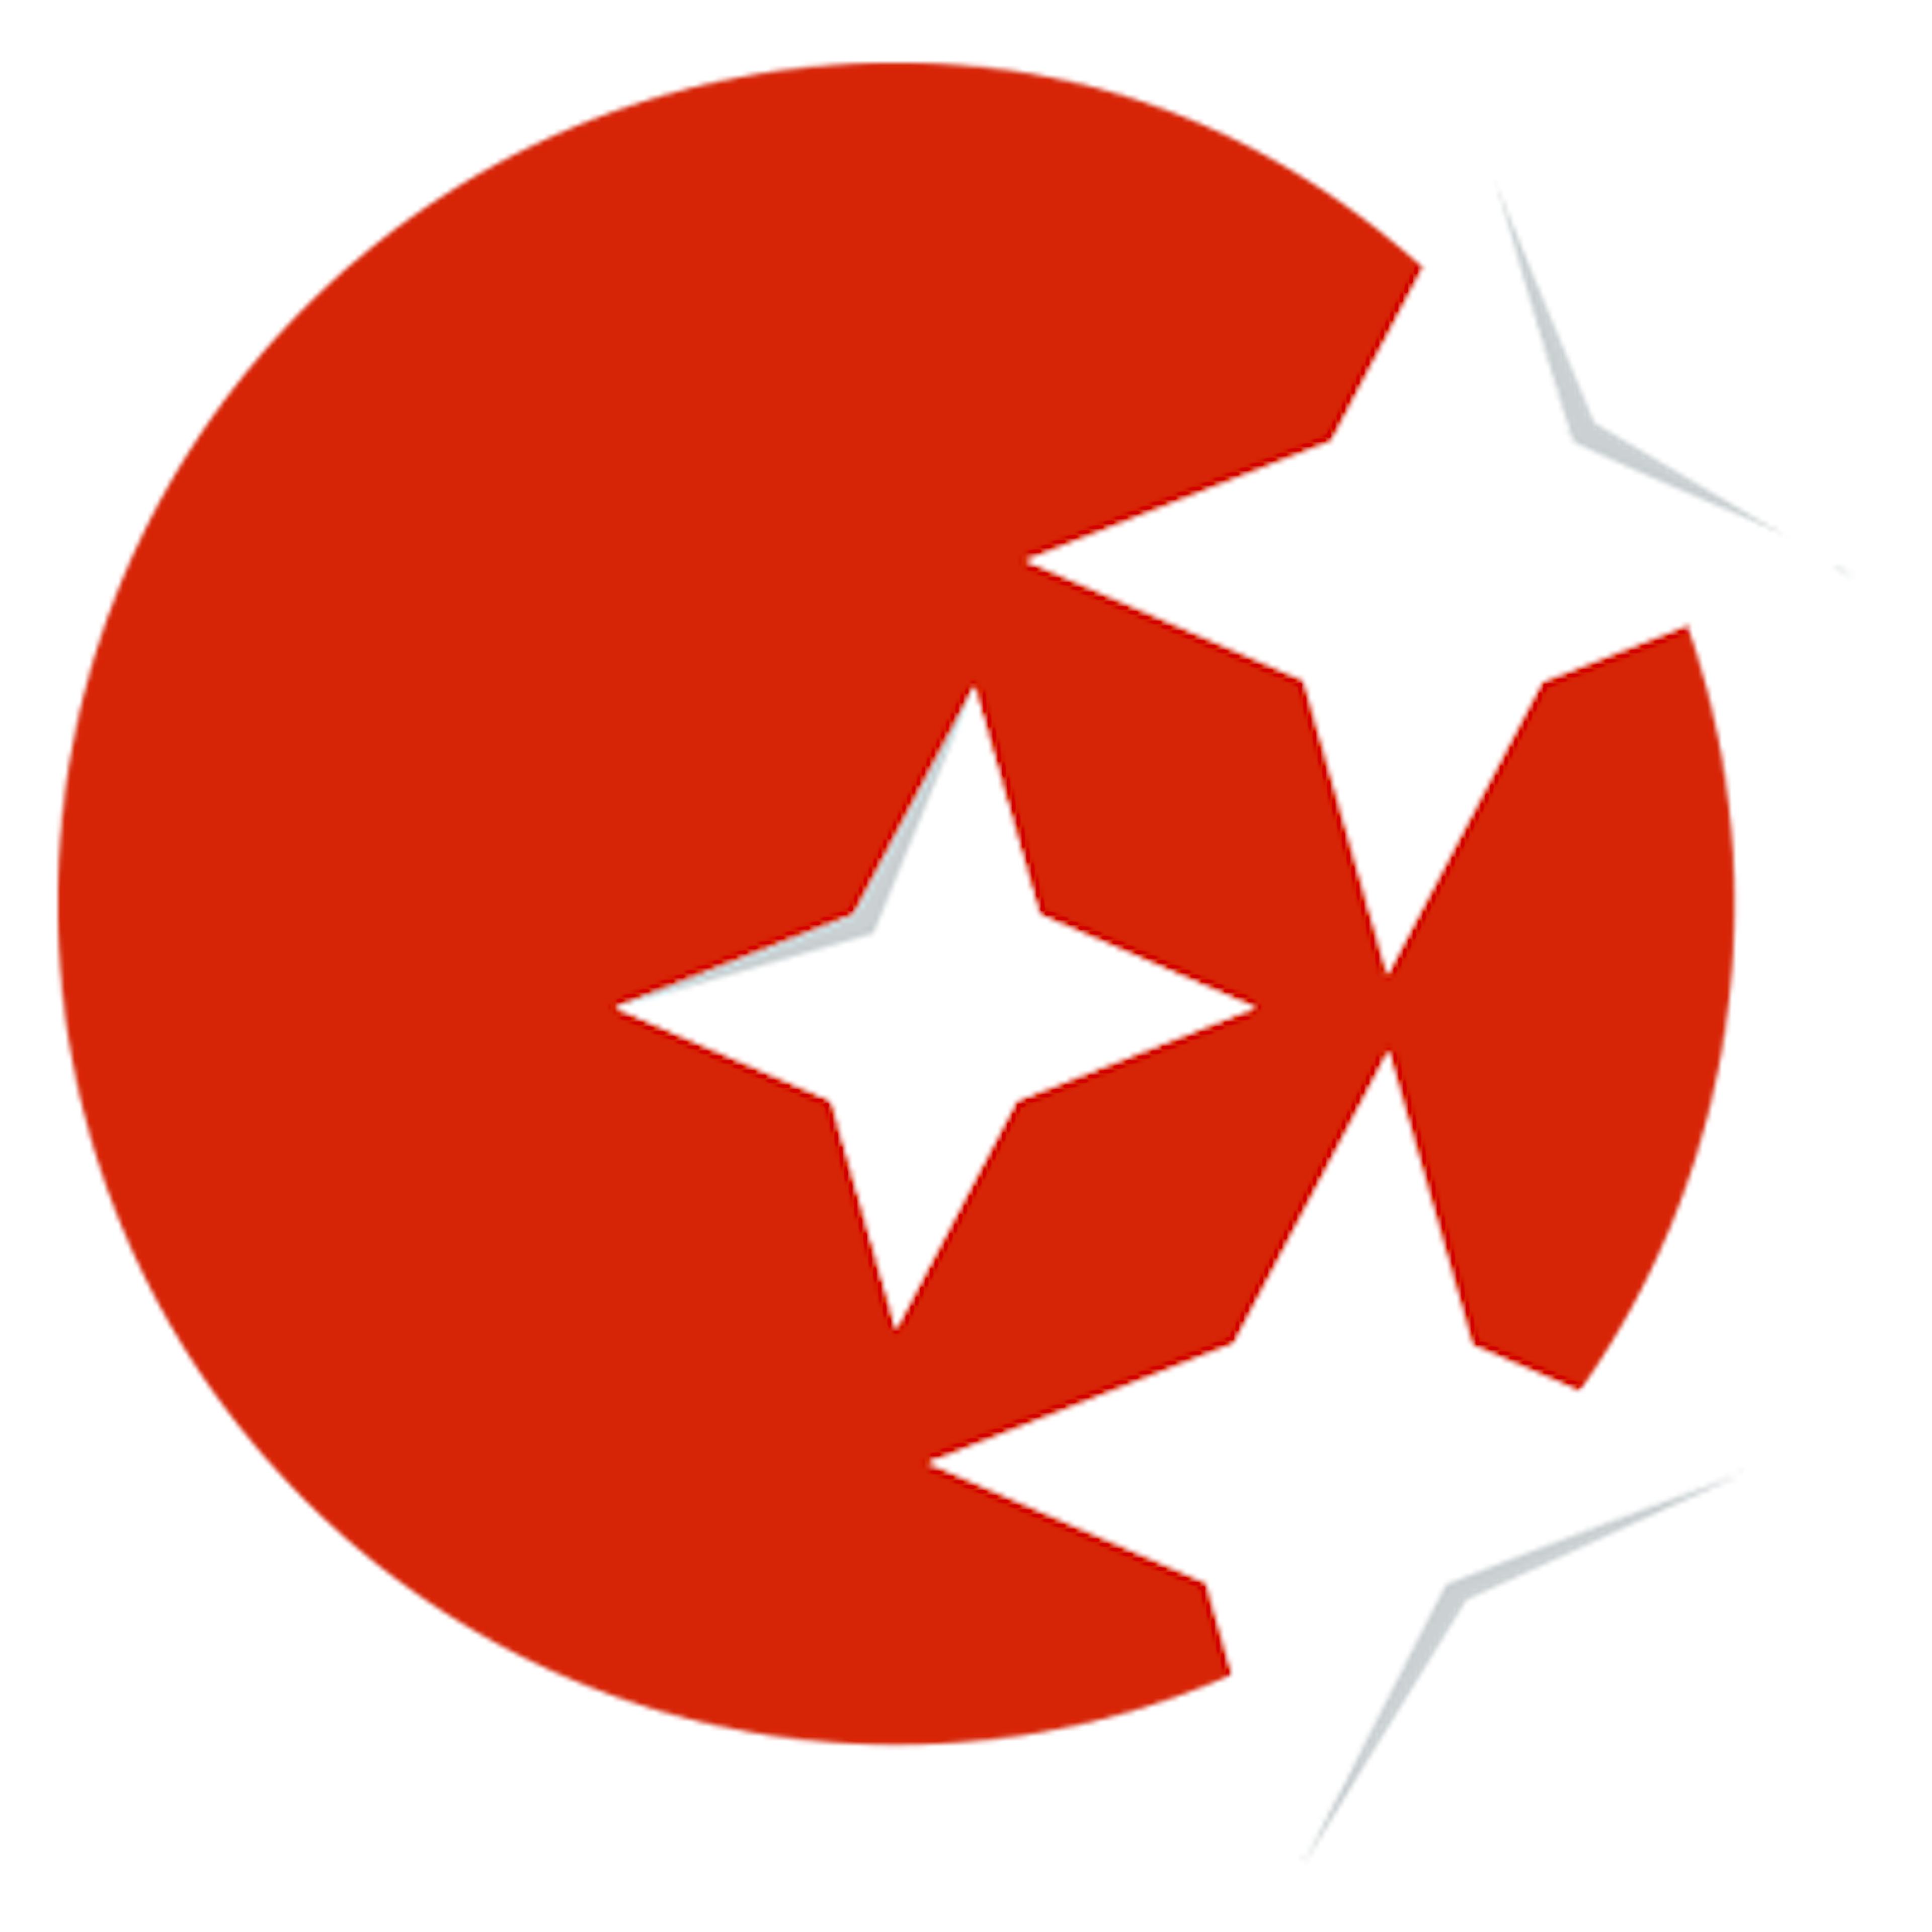 Osiris Logo